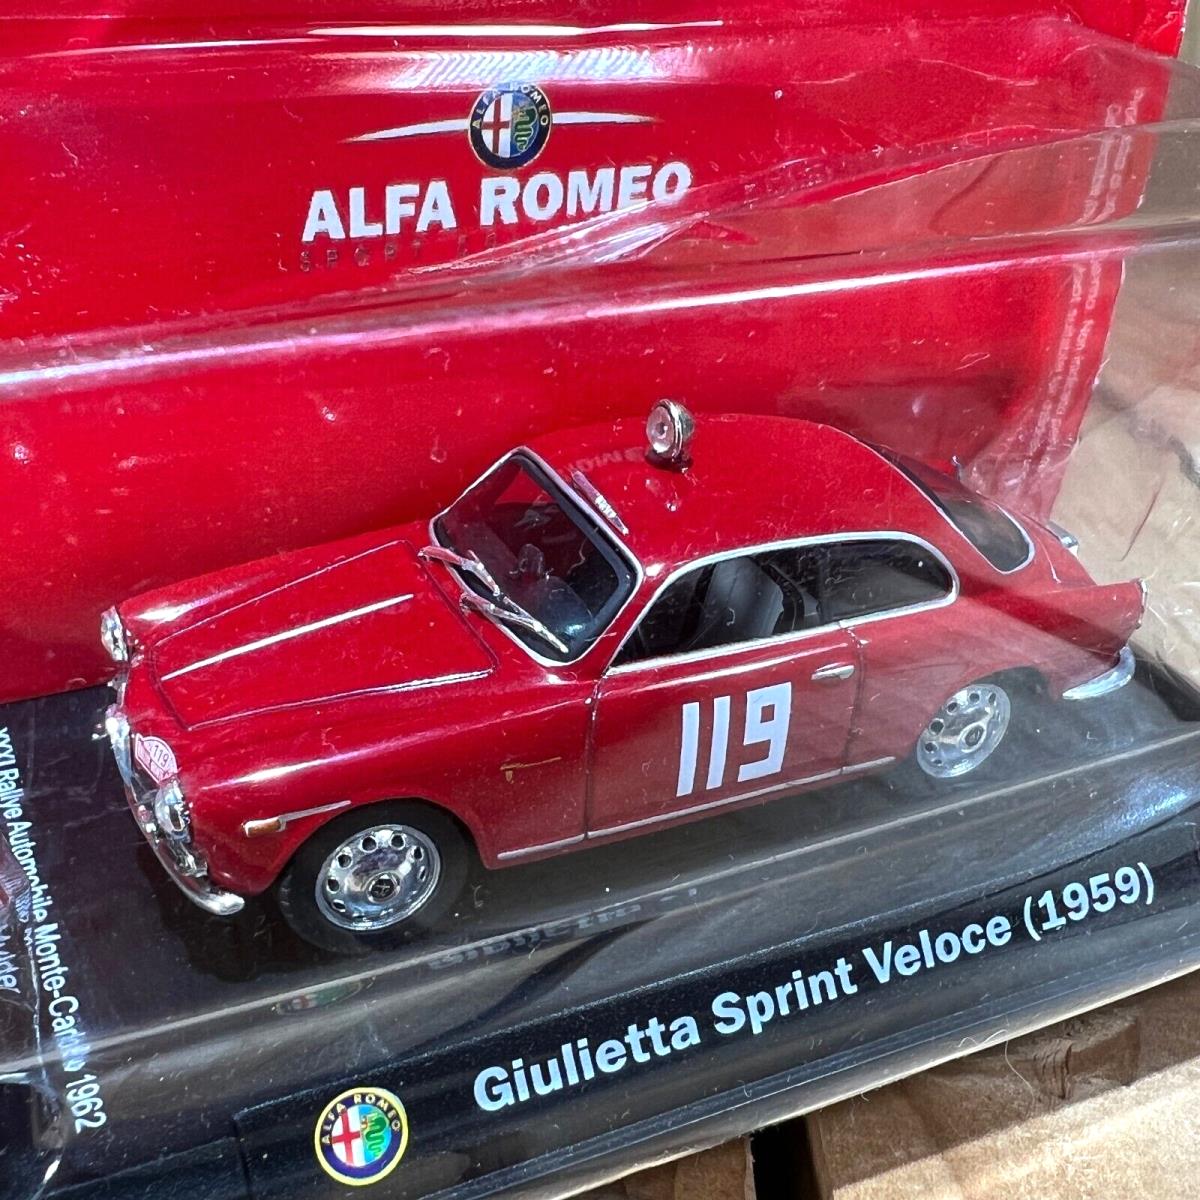 1959 Alfa Romeo Giuliette Sprint Veloce Officially Licensed 1:43 Diecast Car